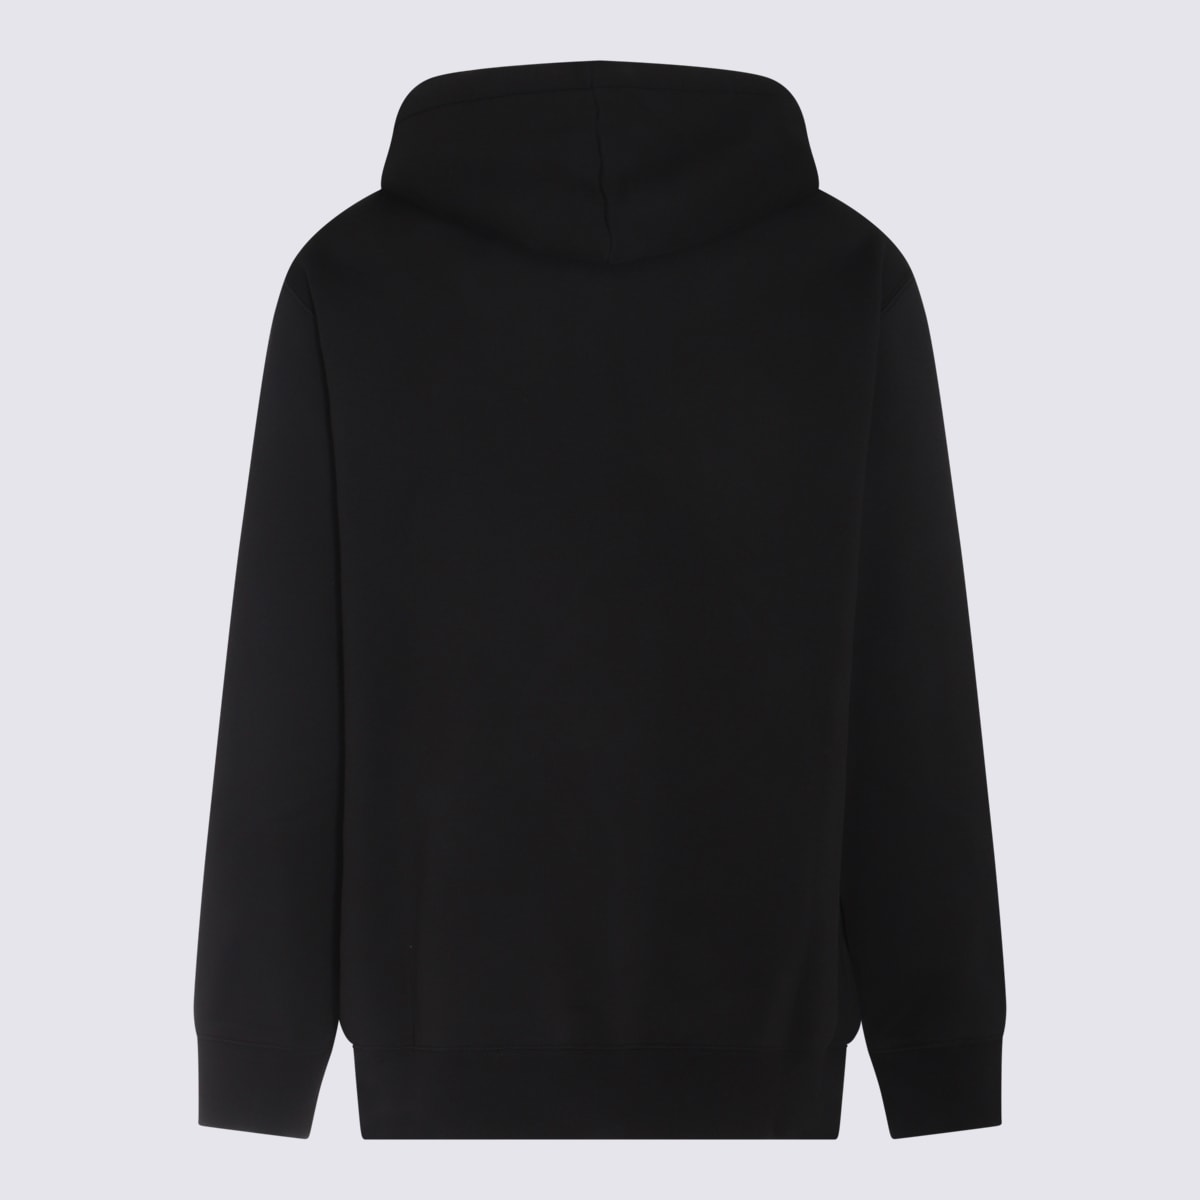 Shop Lanvin Black Cotton Sweatshirt